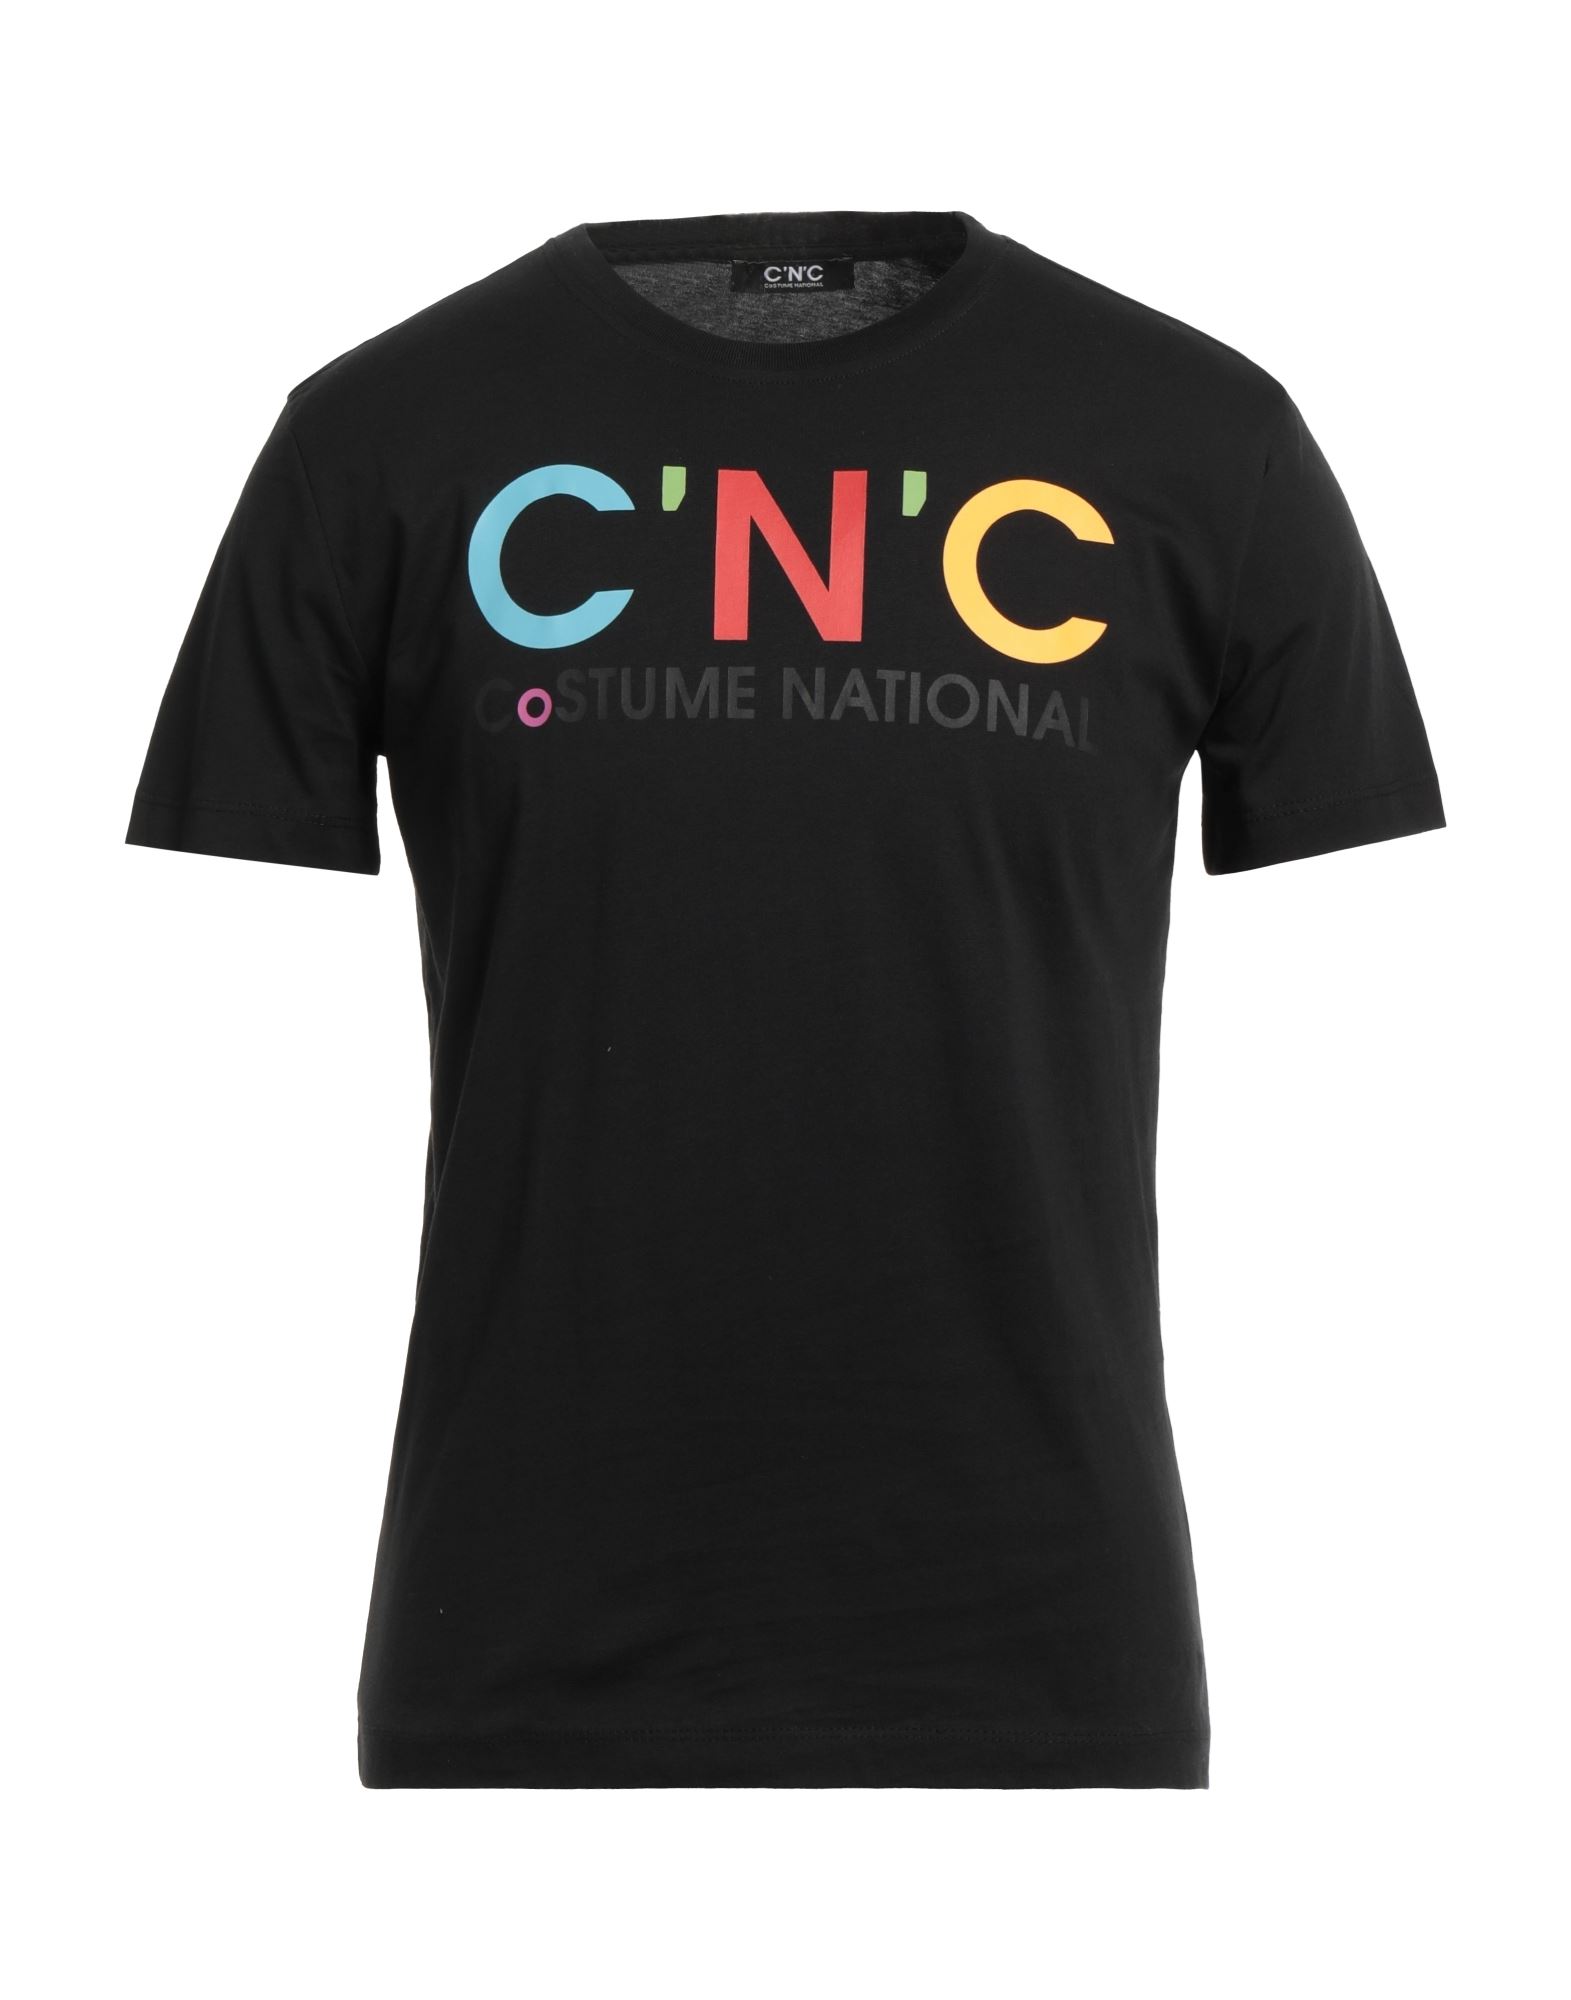 C'N'C' COSTUME NATIONAL C'N'C' COSTUME NATIONAL T-SHIRTS